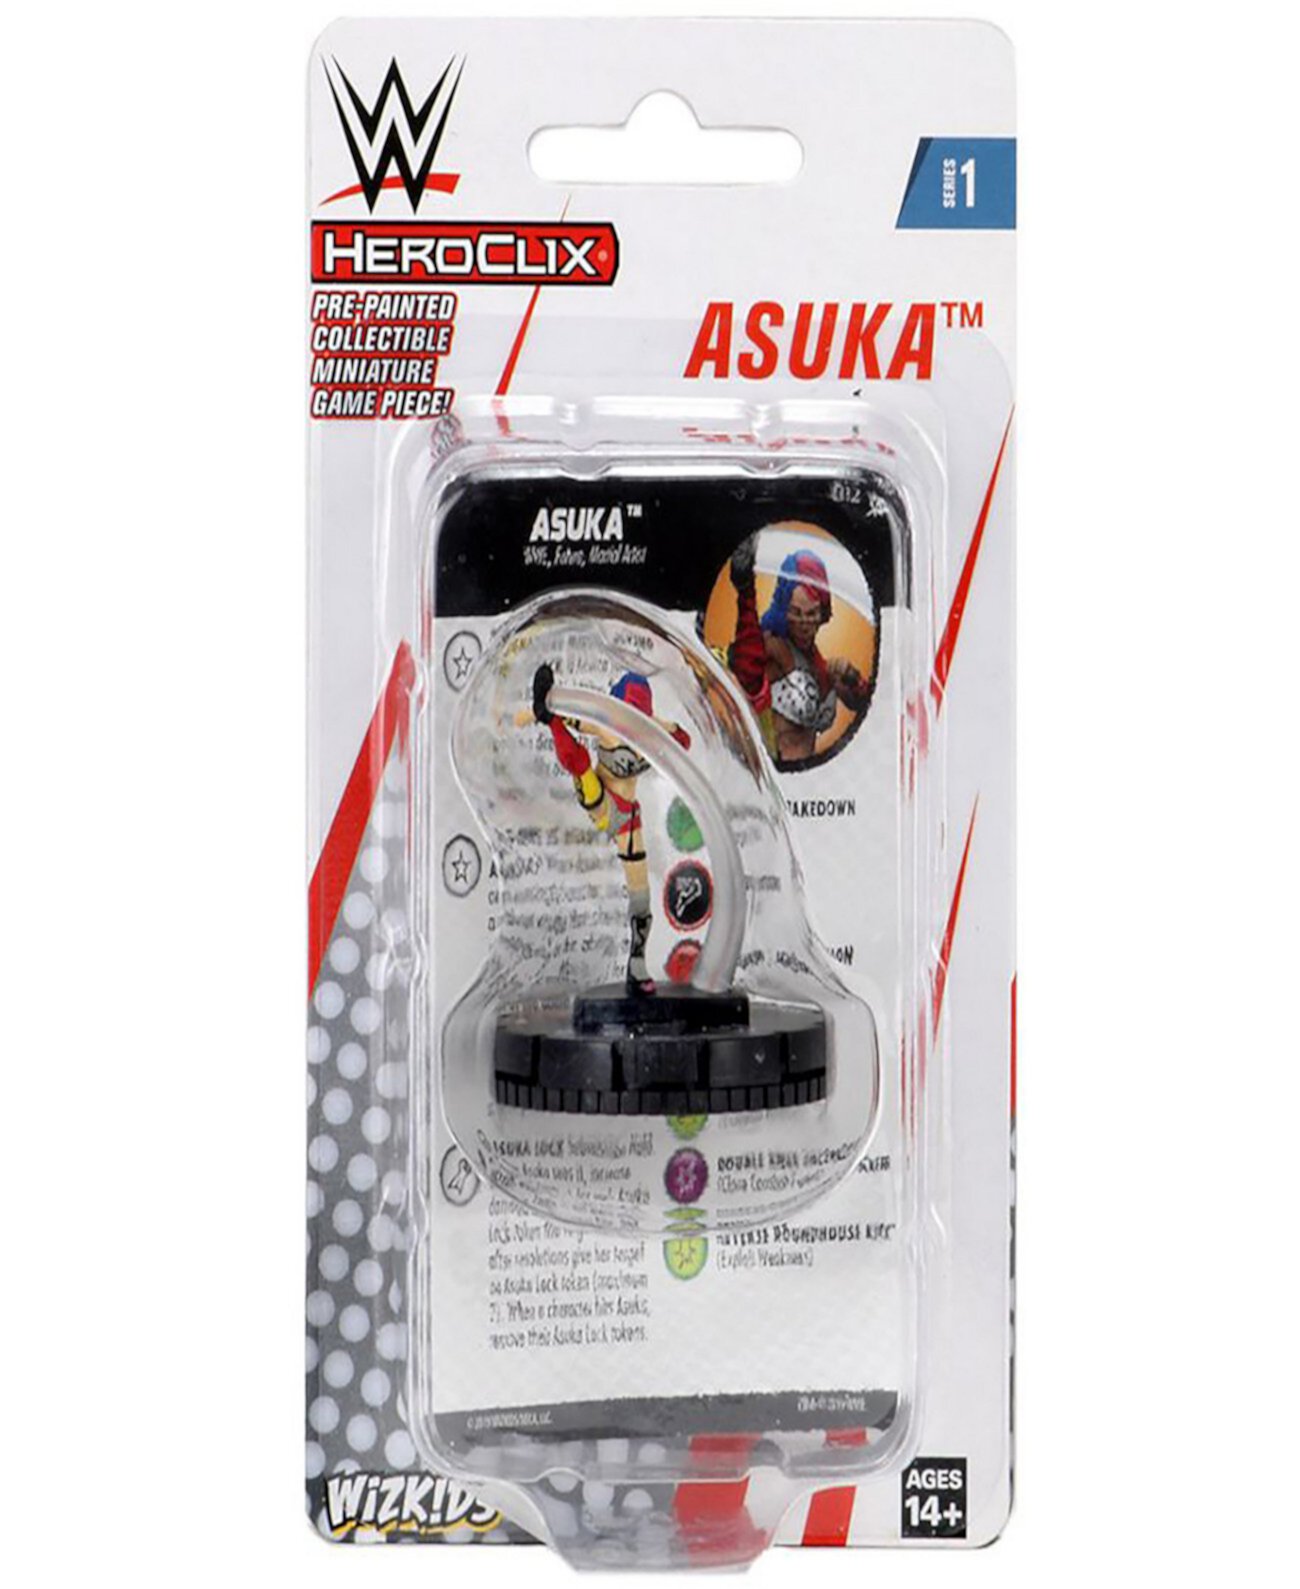 WWE HeroClix Asuka Expansion Pack Miniatures Game WizKids WizKids Games